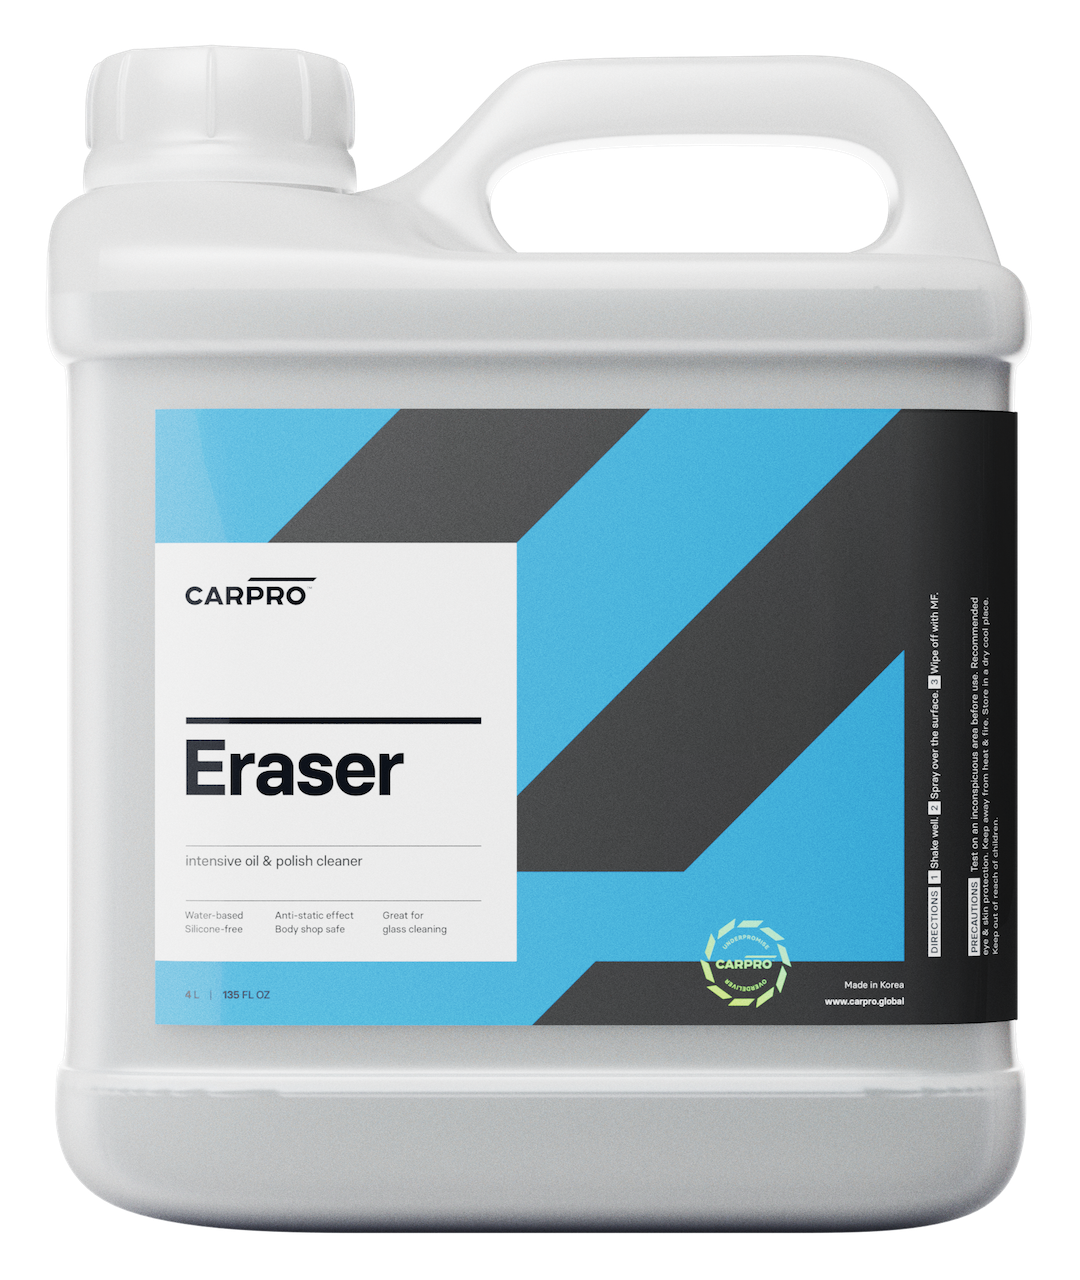 CarPro Eraser